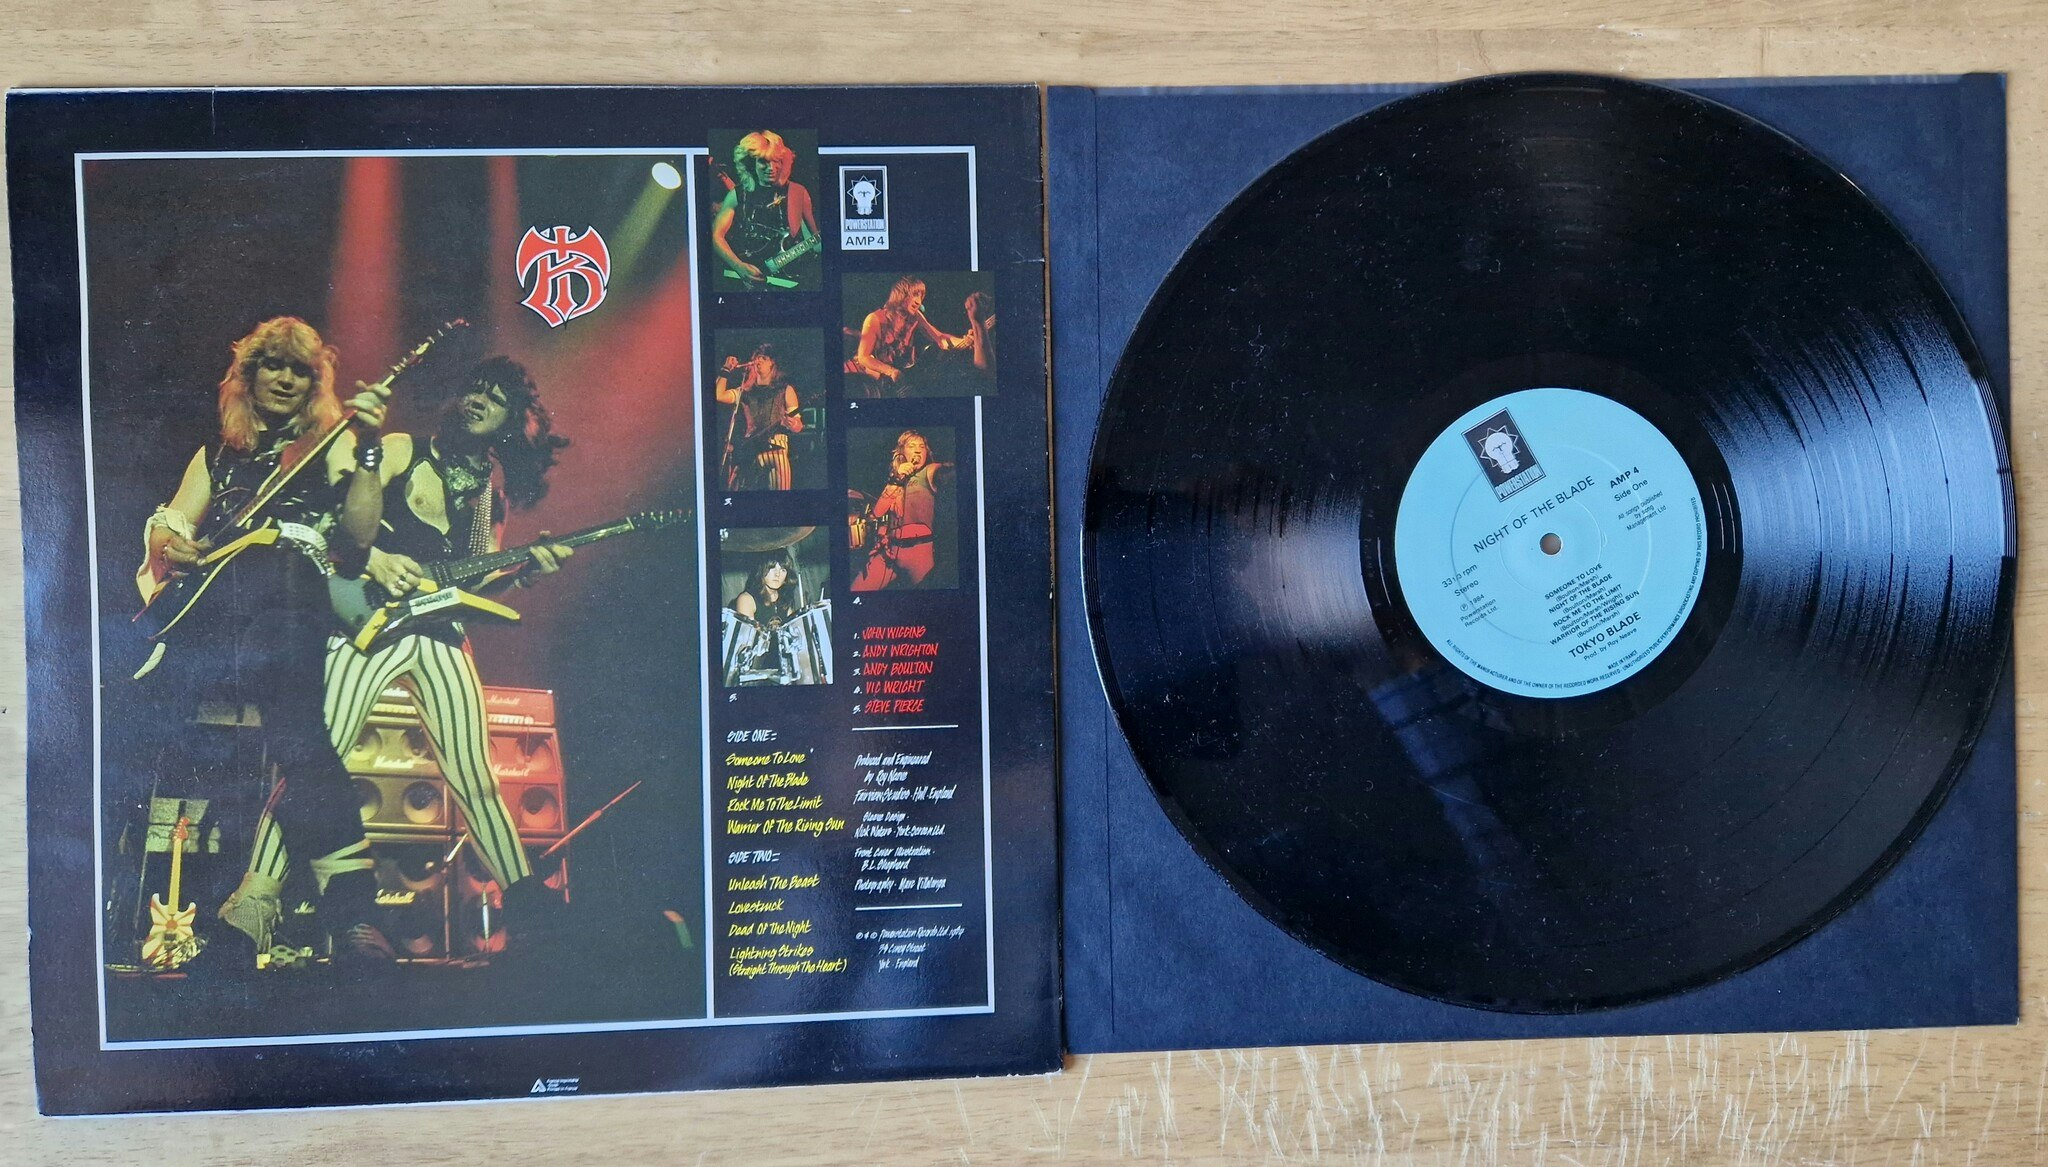 Tokyo Blade, Night of the blade. Vinyl LP